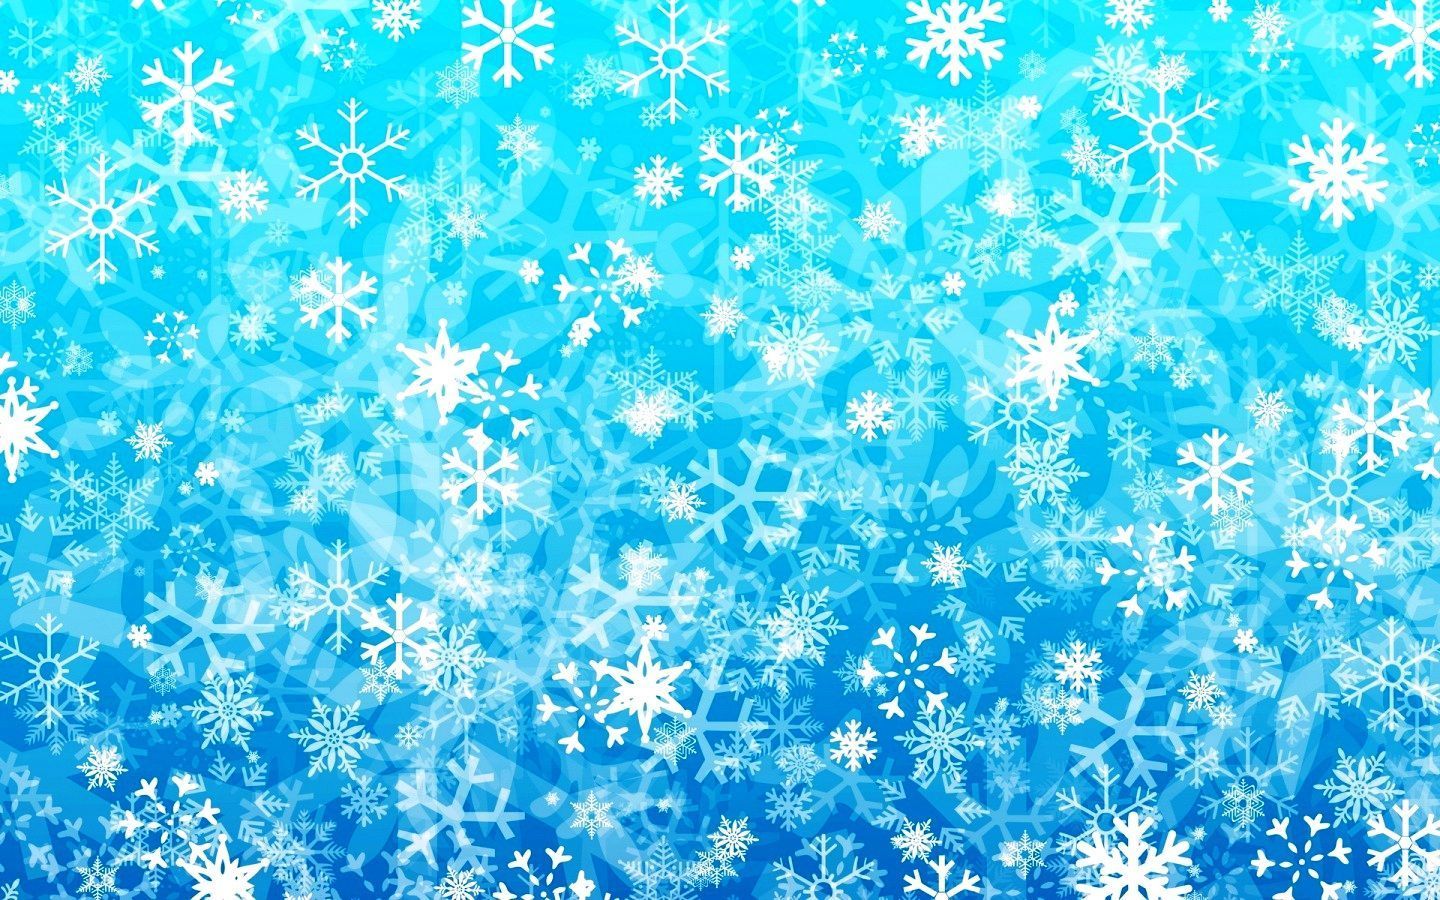 Snowflake Desktop Wallpaper Snowflake In The Snow photos of